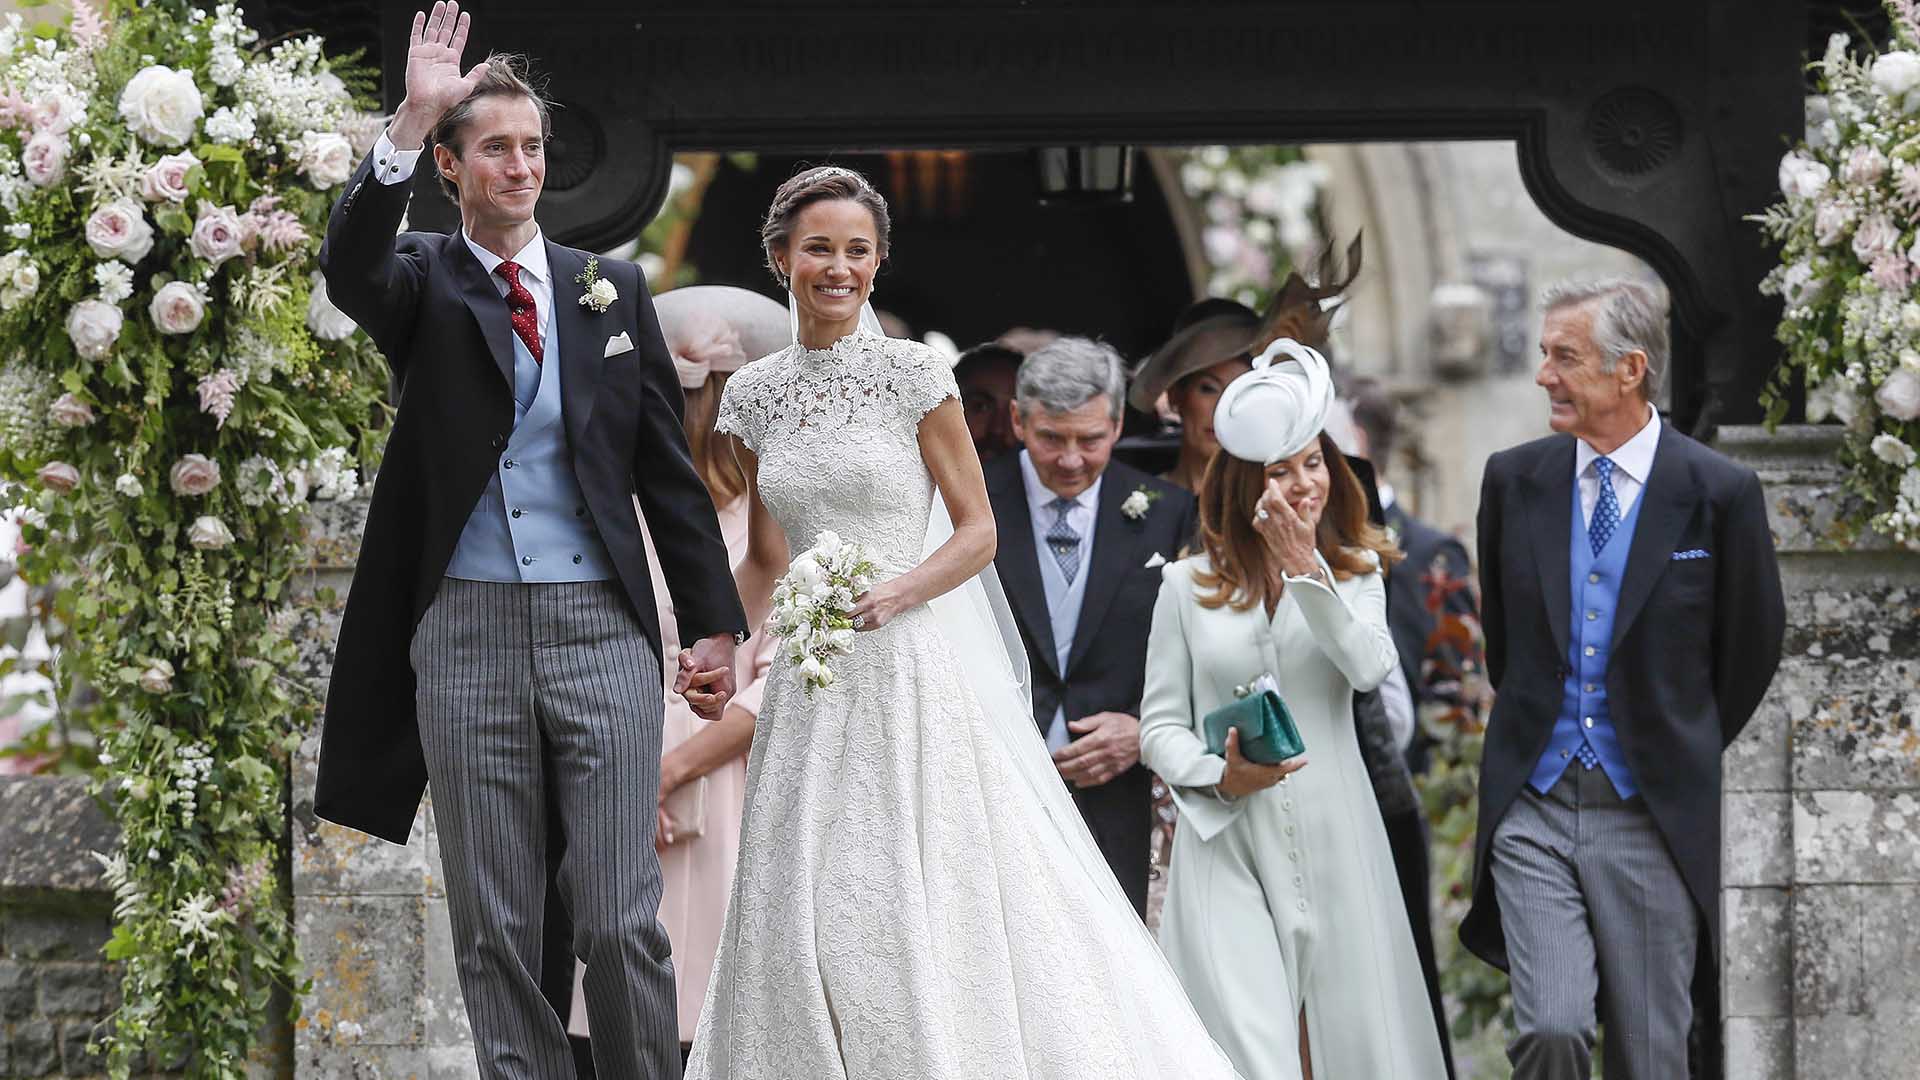 Pippa Middleton and James Matthews attending their wedding at St Mark'schurch in Englefield, Berkshire.